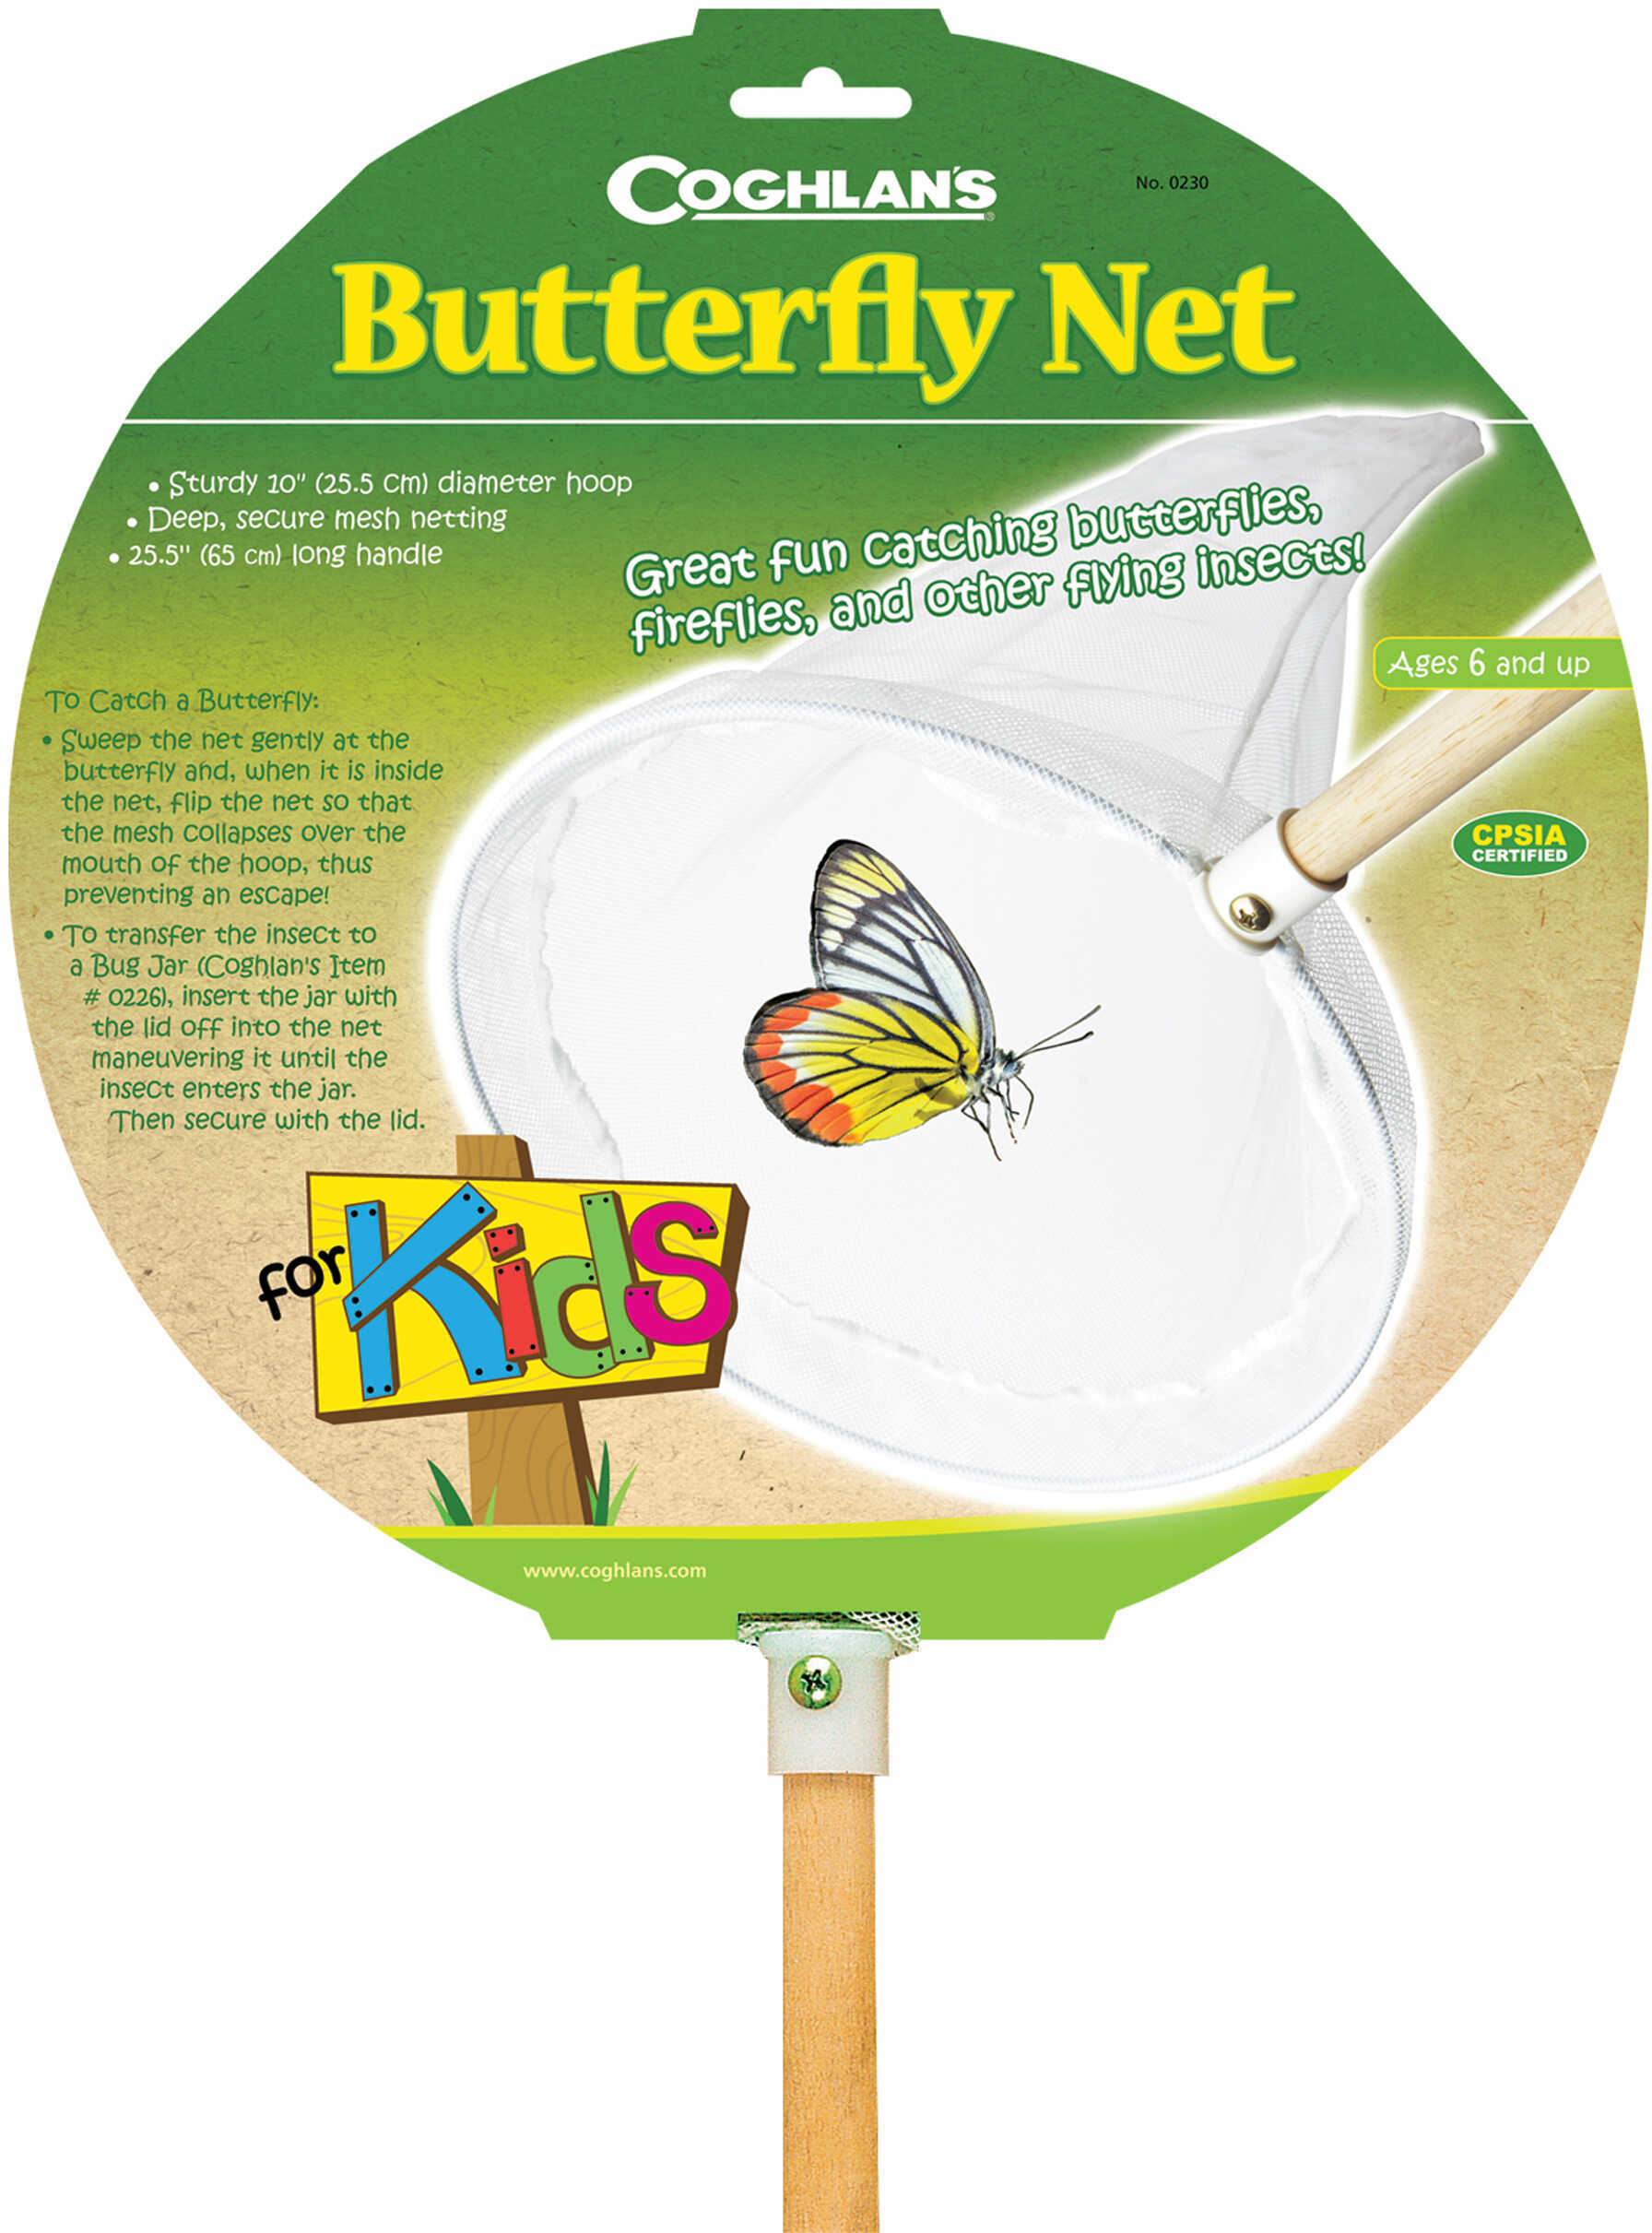 Coghlans Butterfly Net For Kids